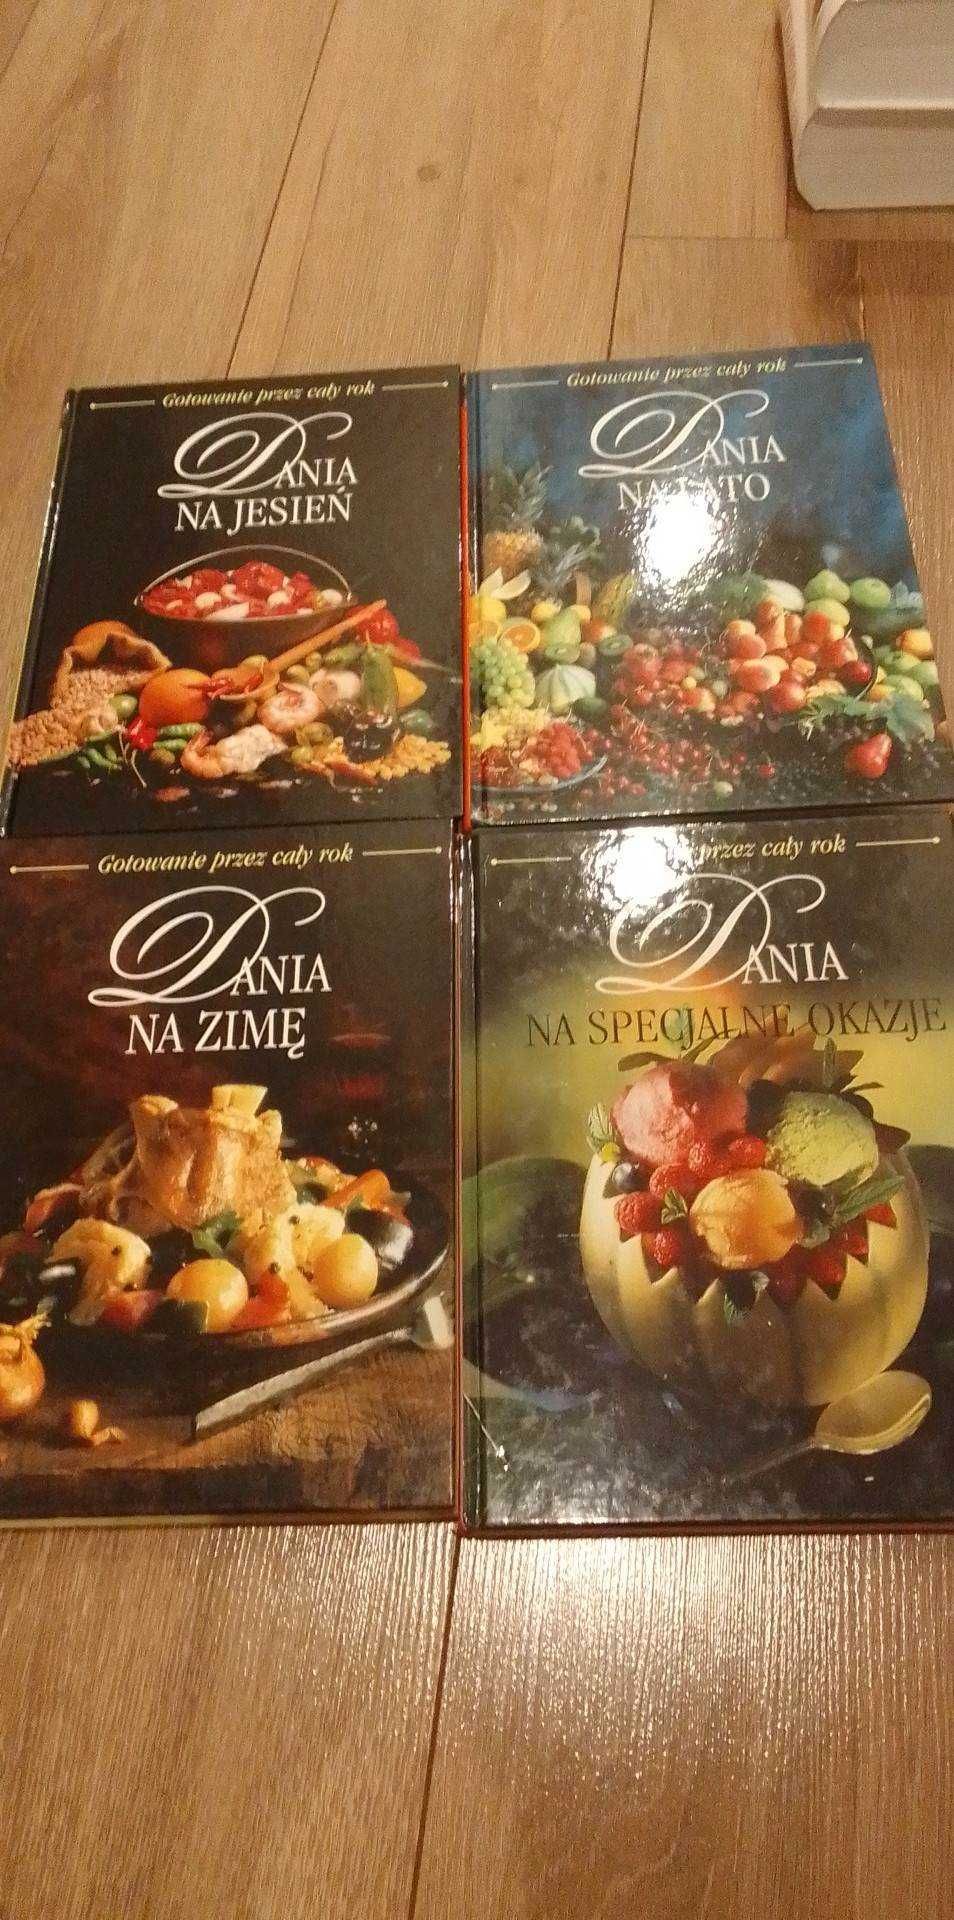 Książki Kulinarne różne zestawy - poradniki, książki kulinarne